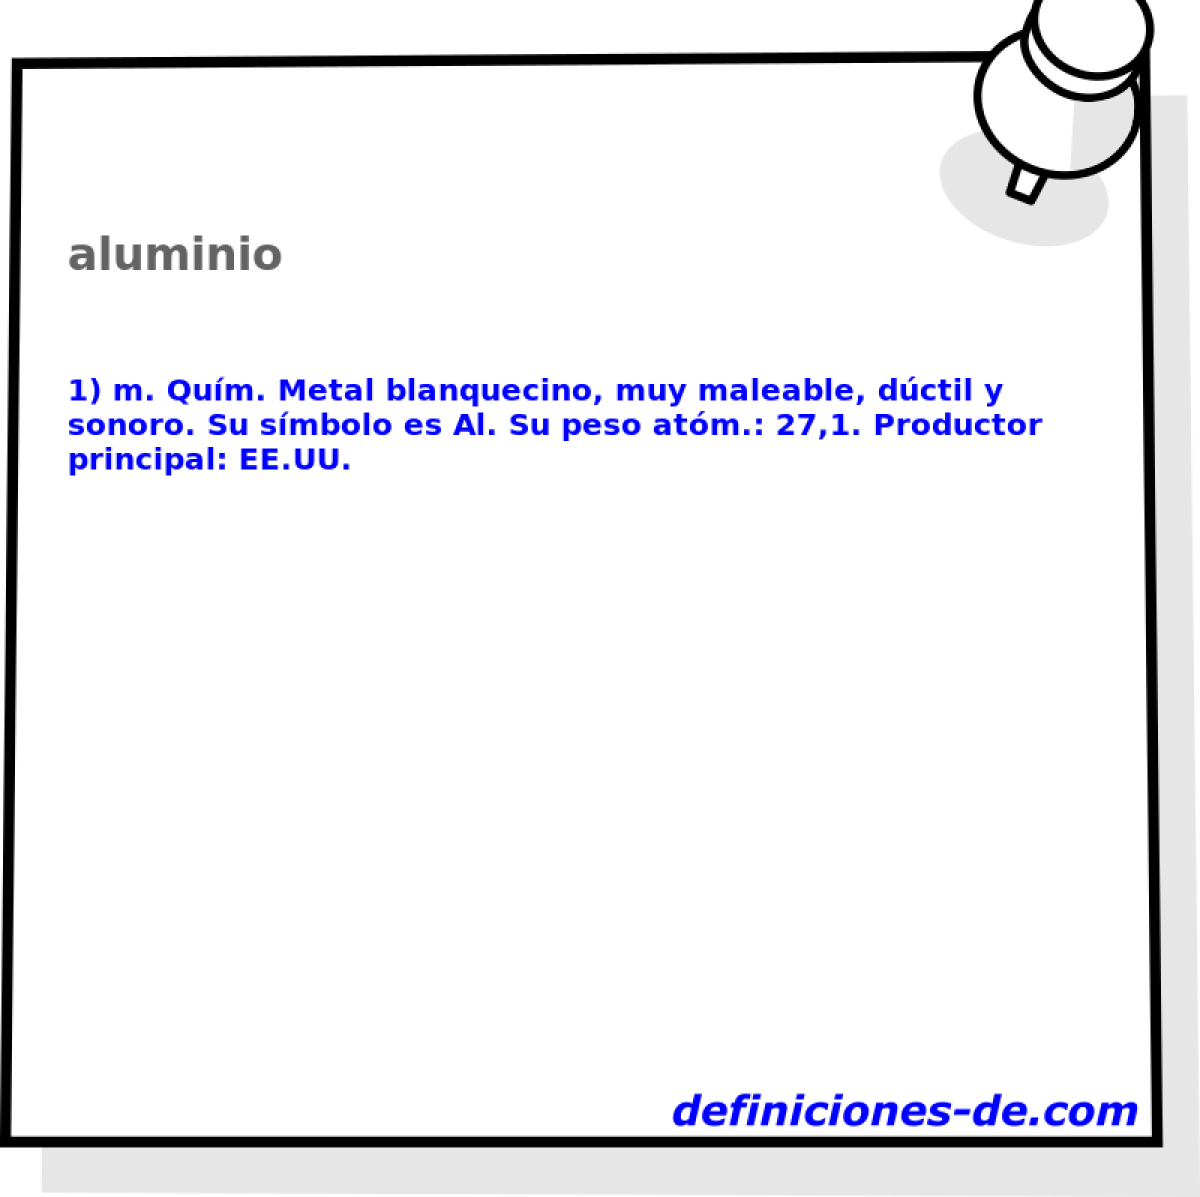 aluminio 